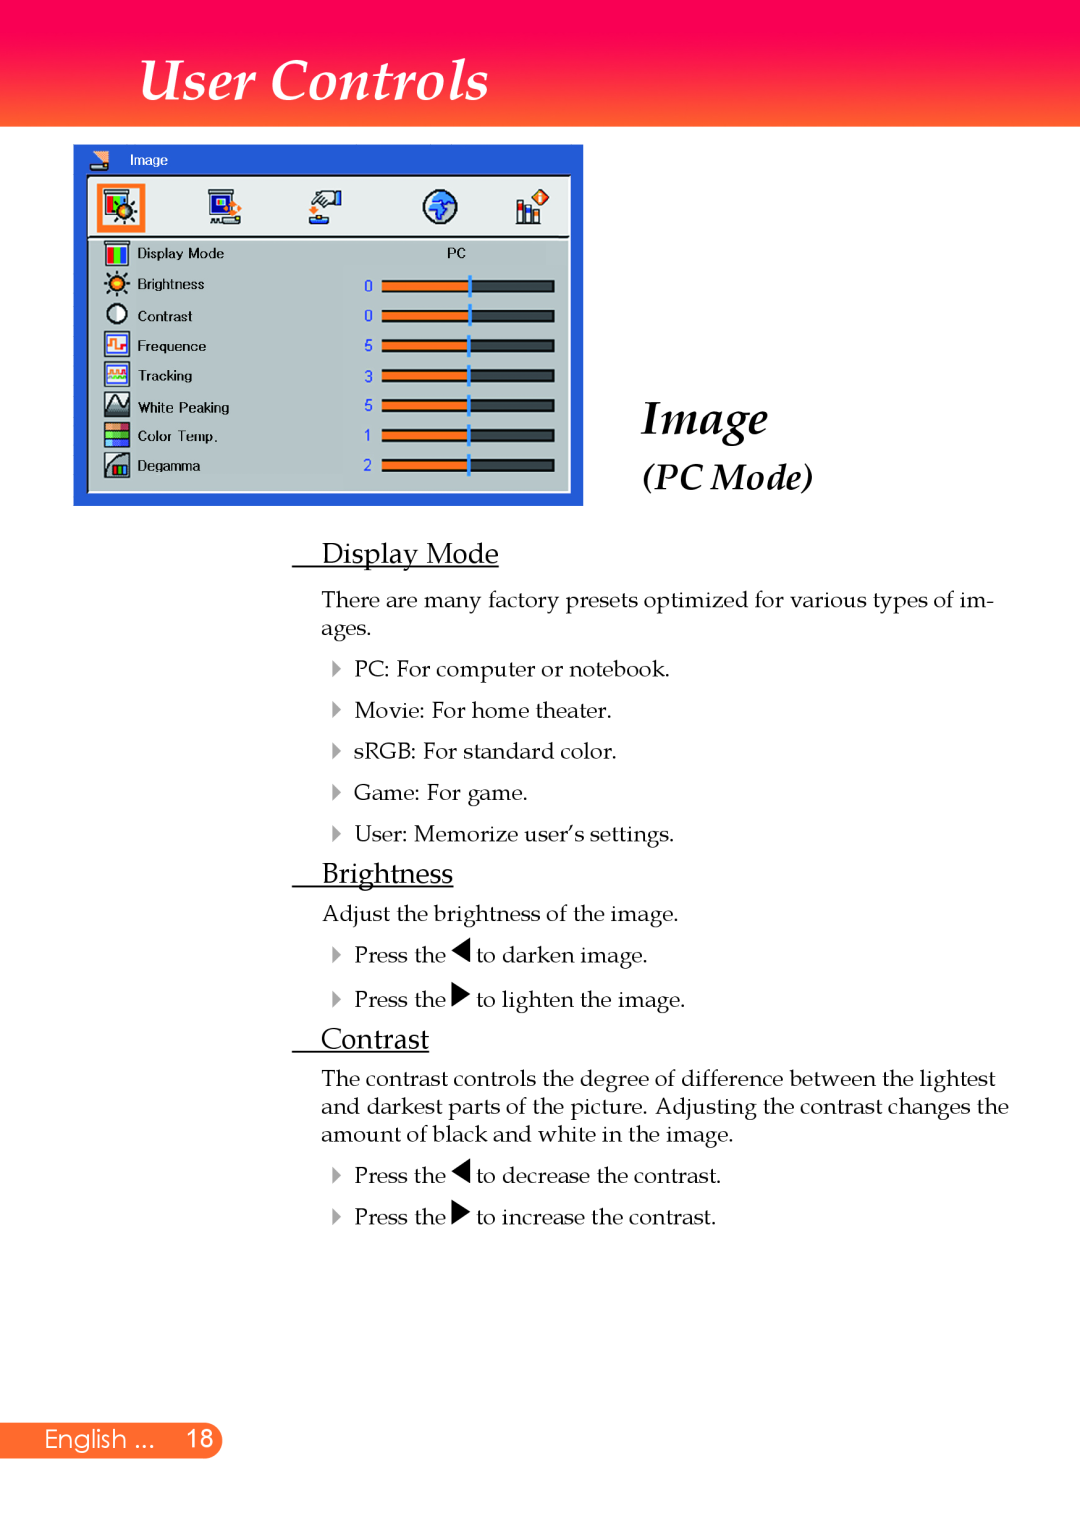 InFocus X9 manual Image, PC Mode, Display Mode, Brightness, Contrast, User Controls, English 